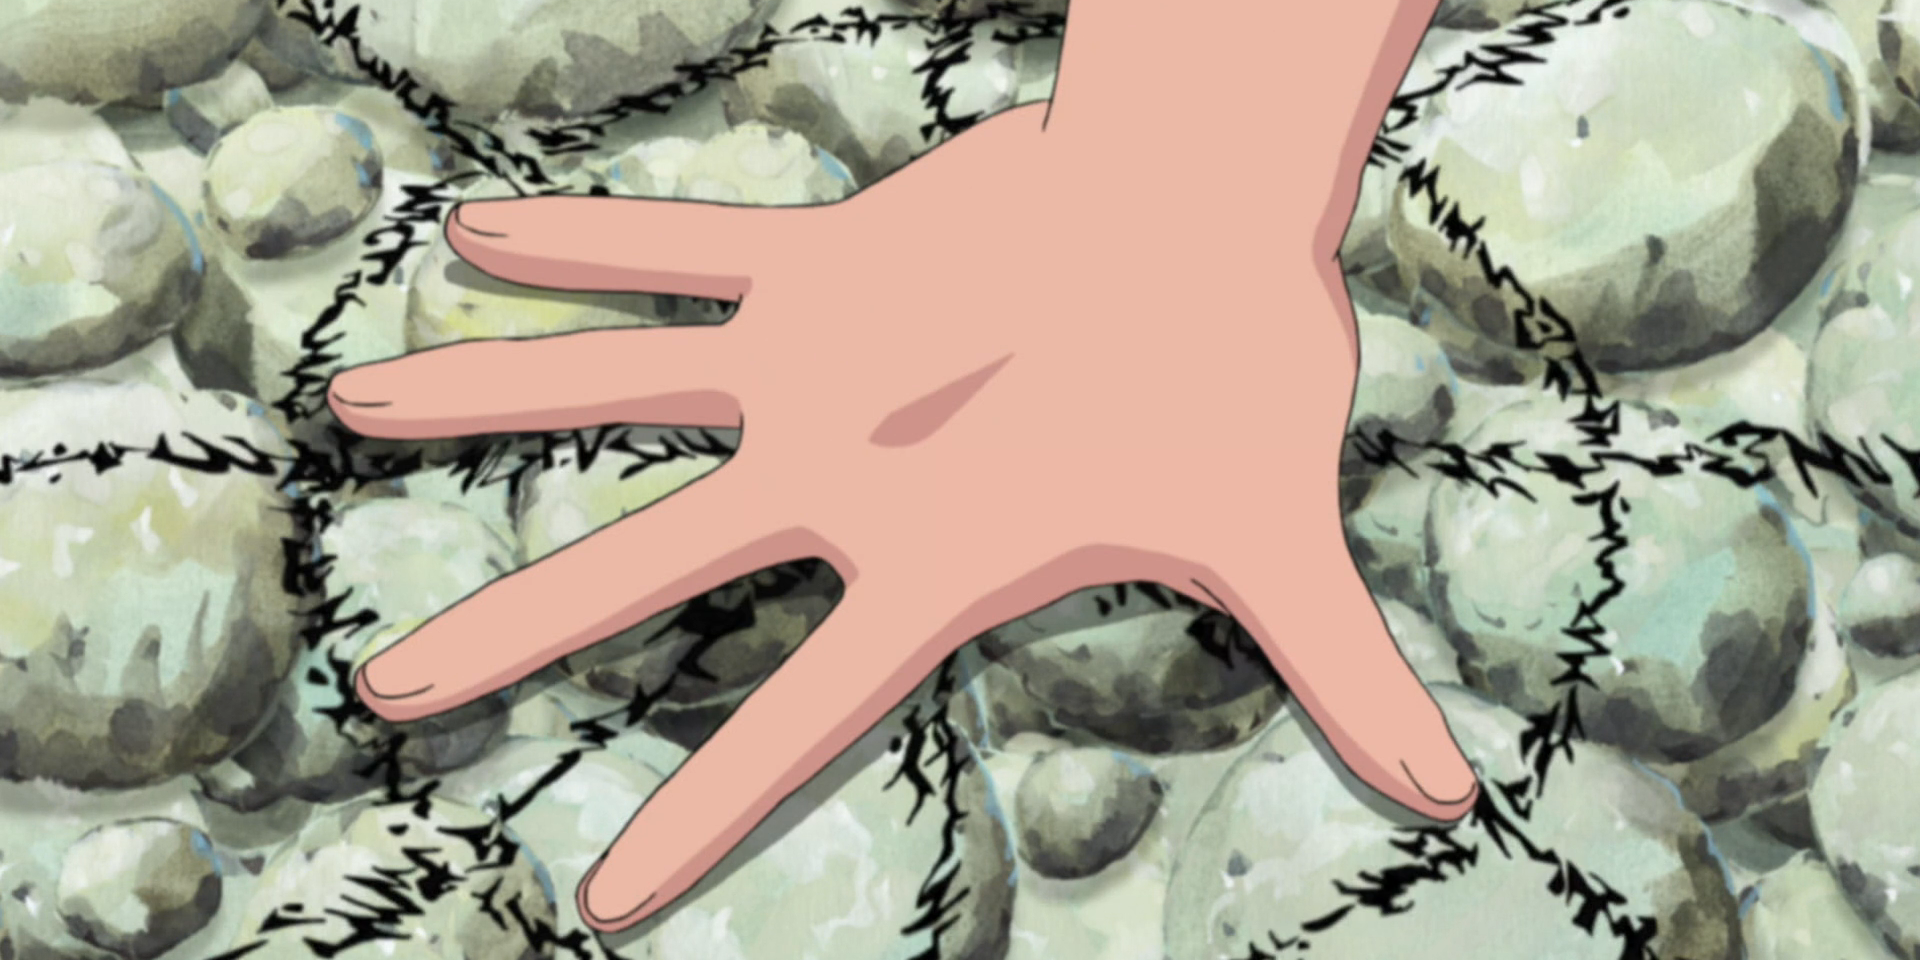 Naruto's hand over a summoning jutsu seal - Naruto